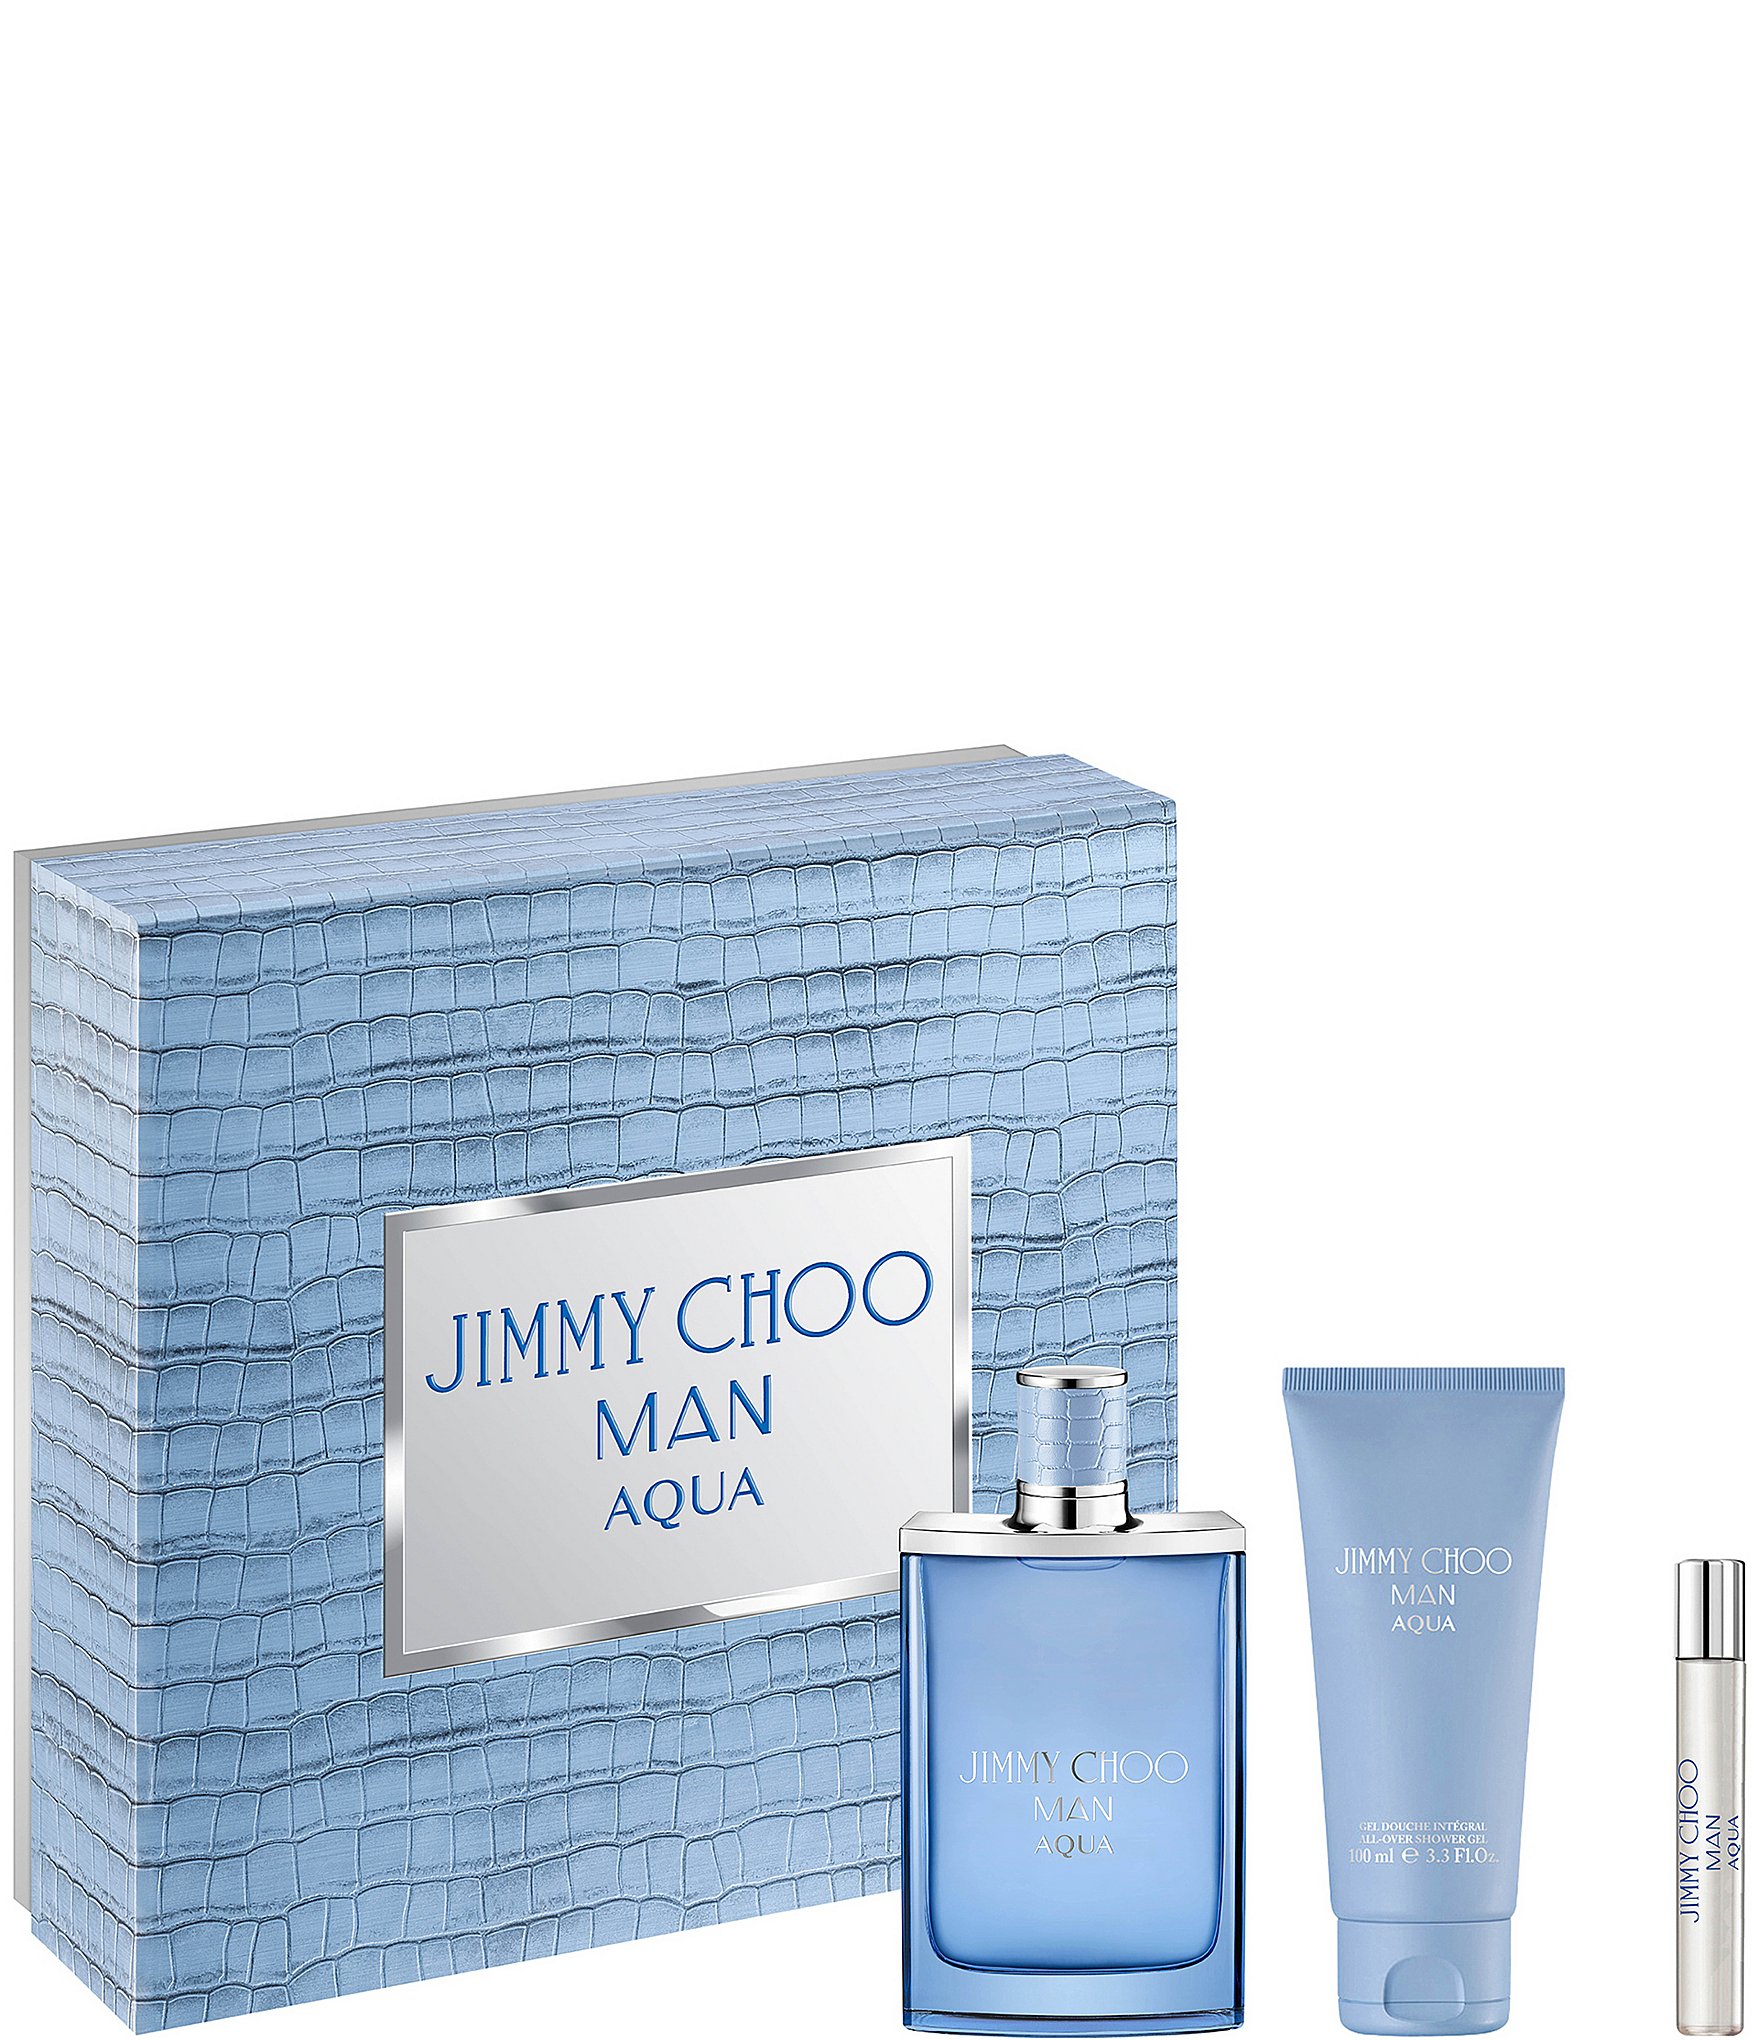 Jimmy Choo Man Blue Eau de Toilette Set